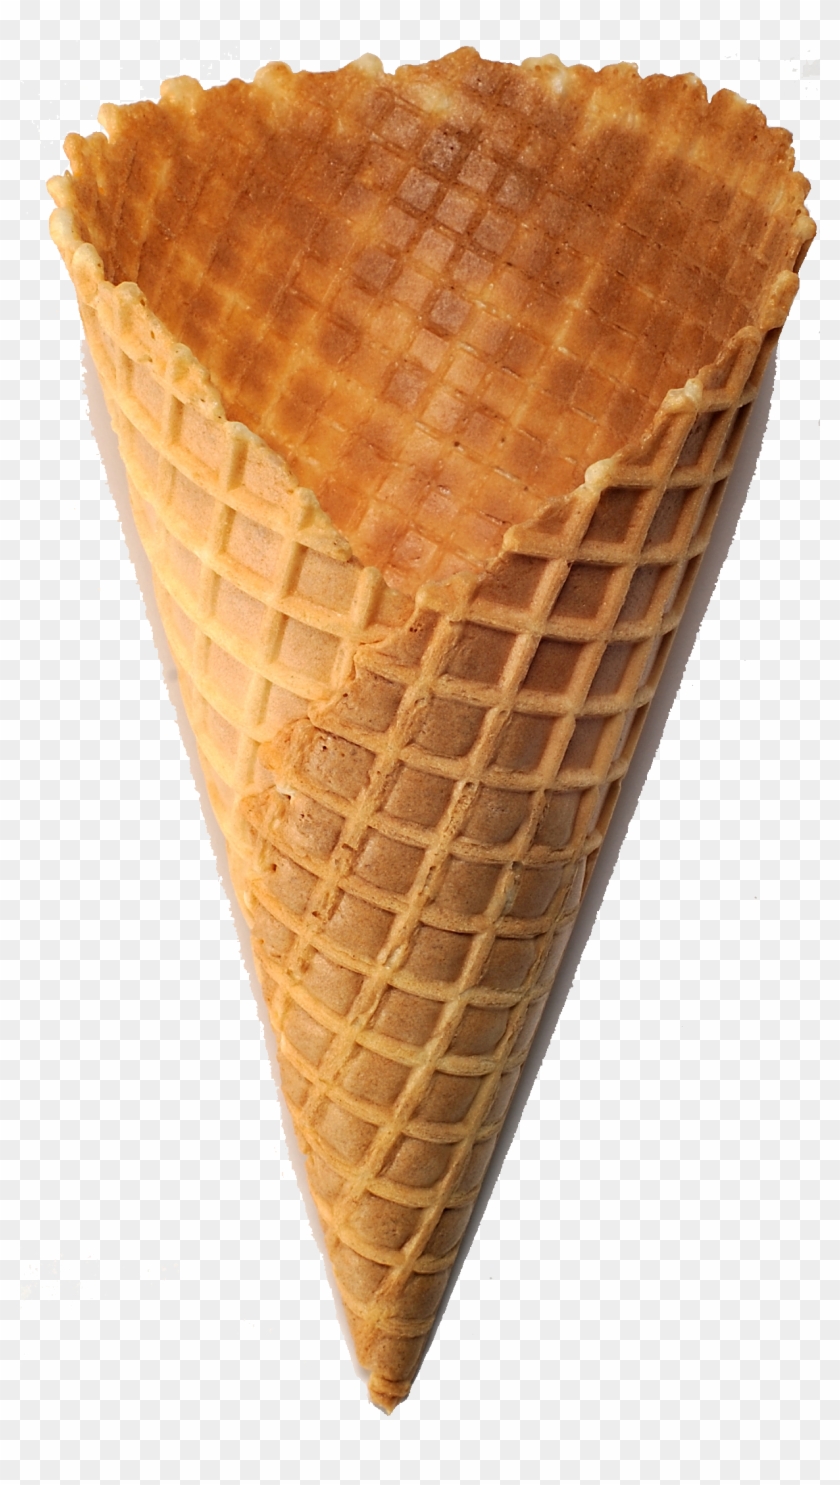 Ice Cream Cones Frozen - Ice Cream Cone With Transparent Background Clipart